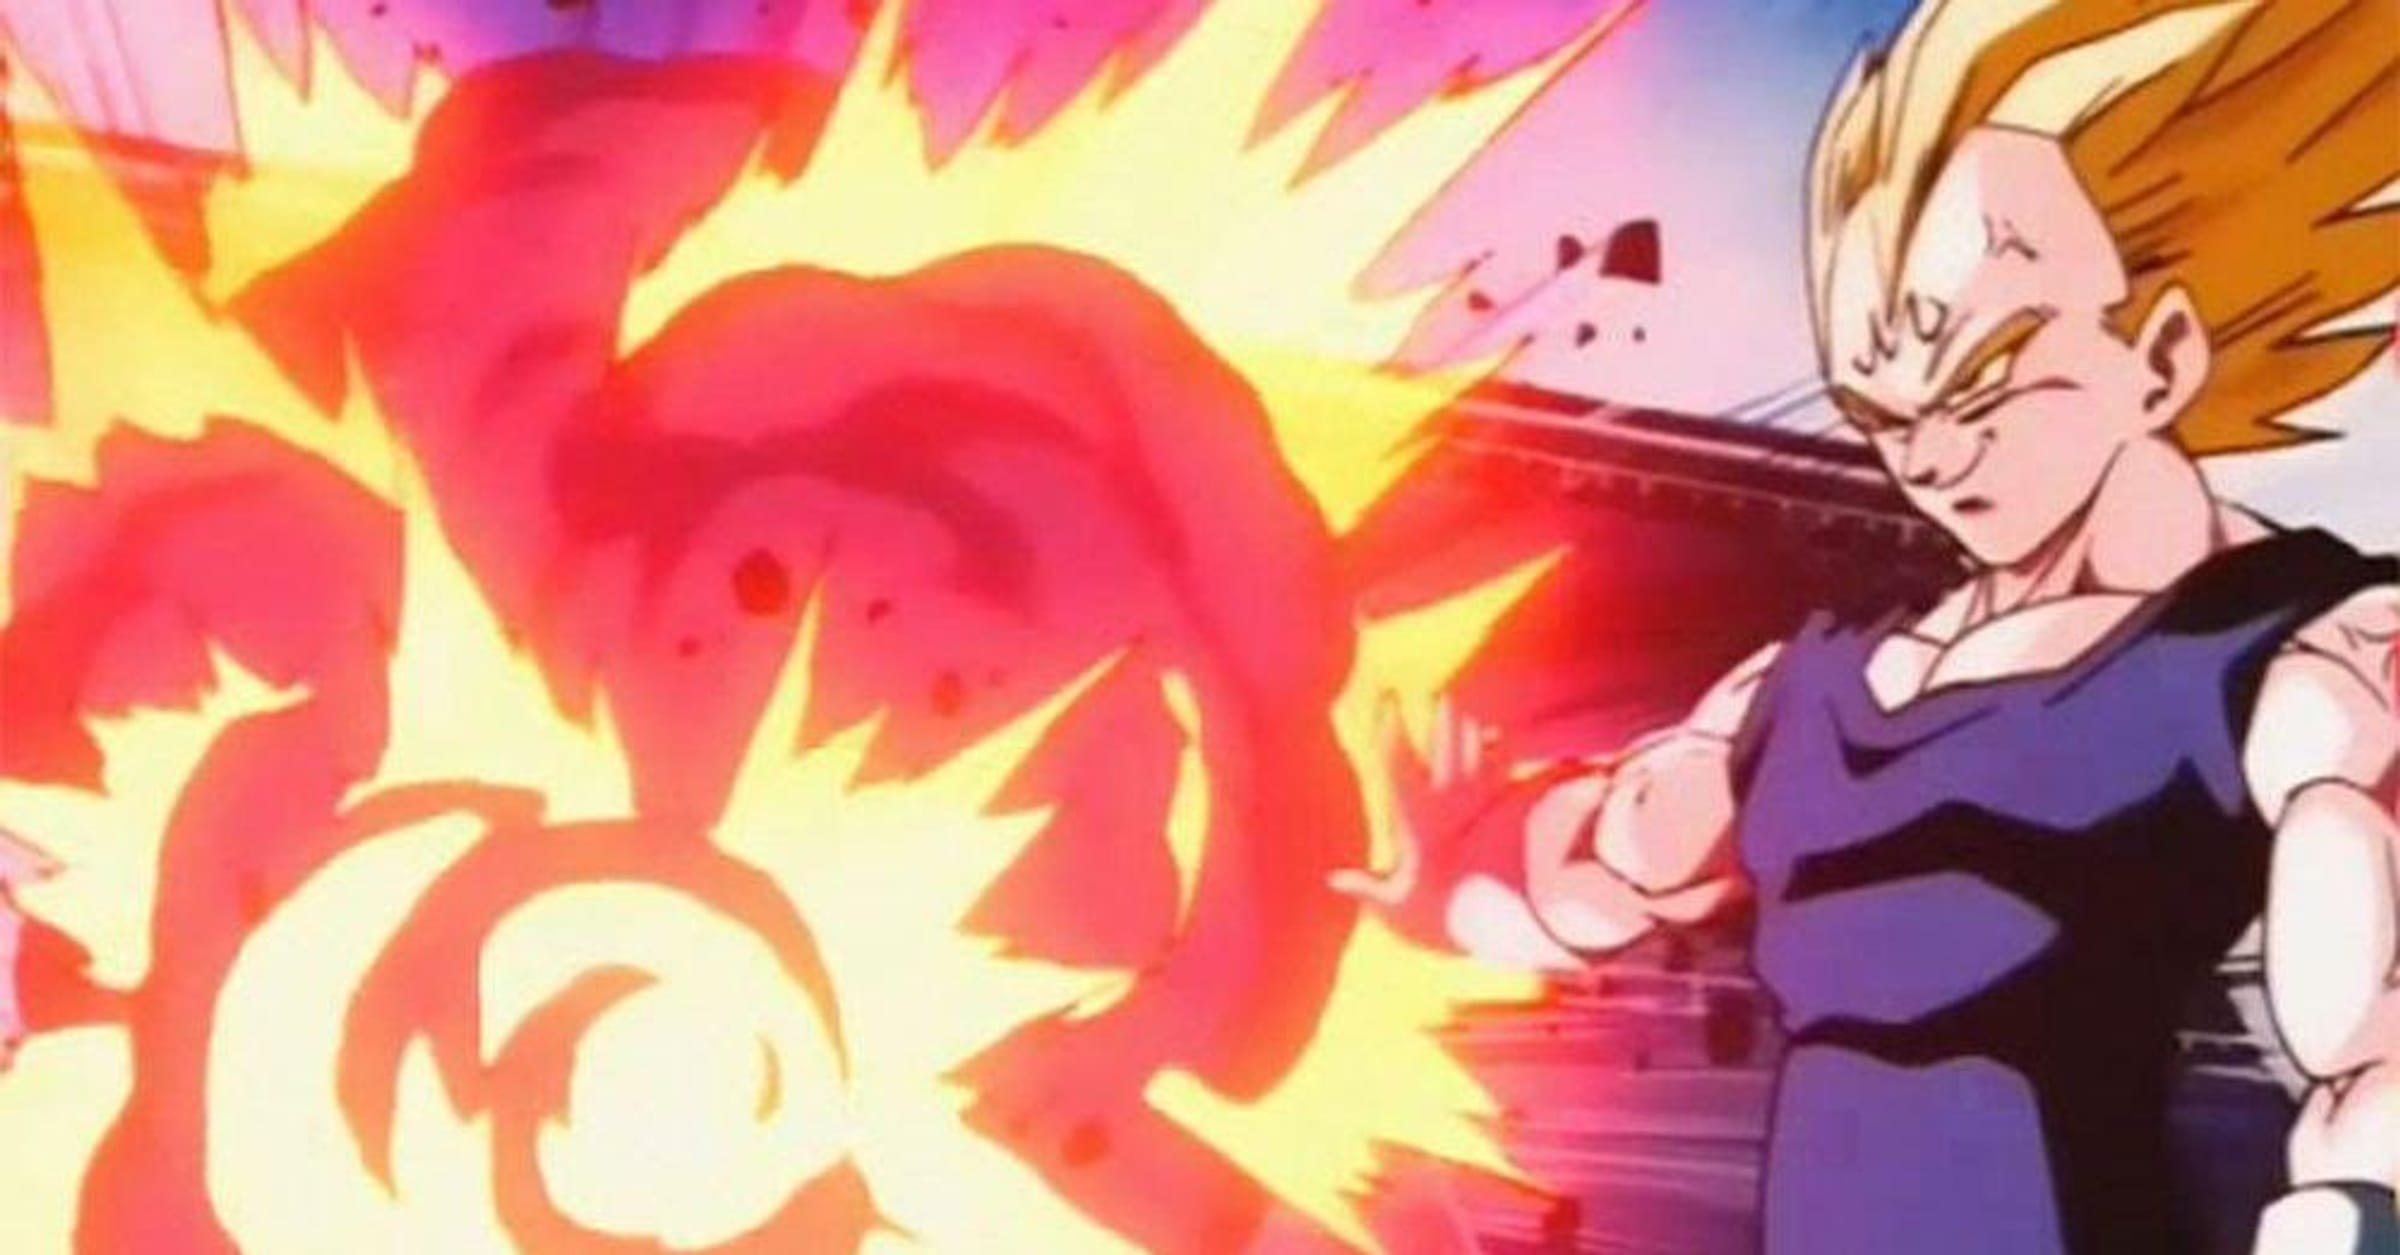 The 15 Best Dragon Ball Manga Panels, Ranked